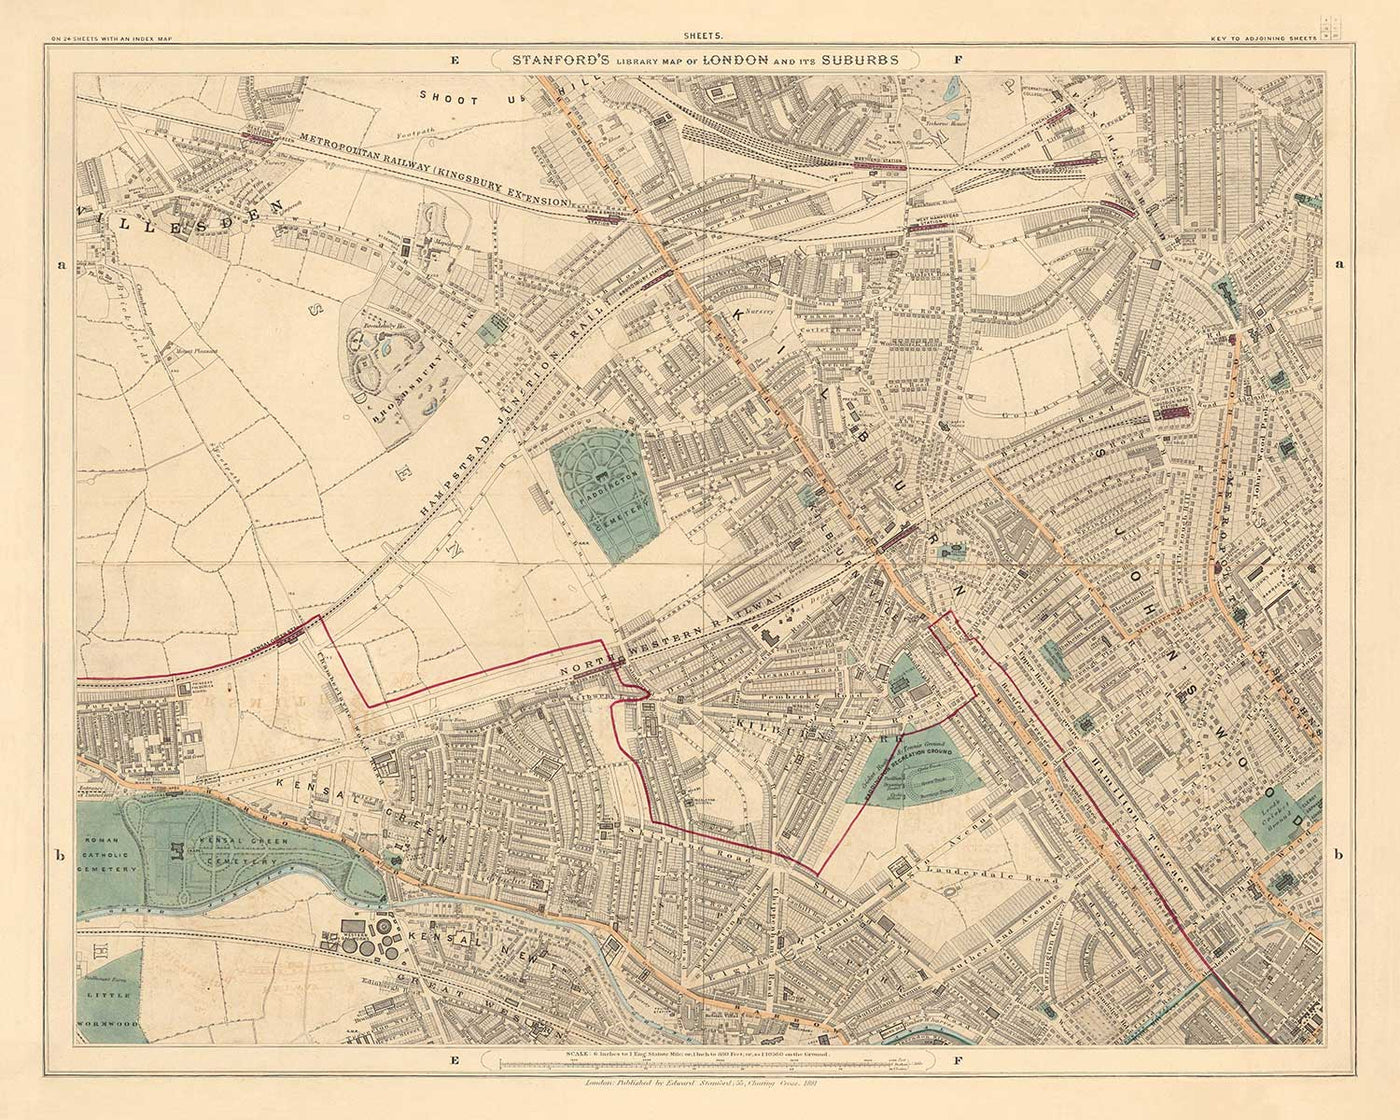 Antiguo mapa en color del oeste de Londres, 1862 - St Johns Wood, Kilburn, Kensal Green, Finchley Rd, Willesden - NW6, NW8, NW2, W9, W10, NW10